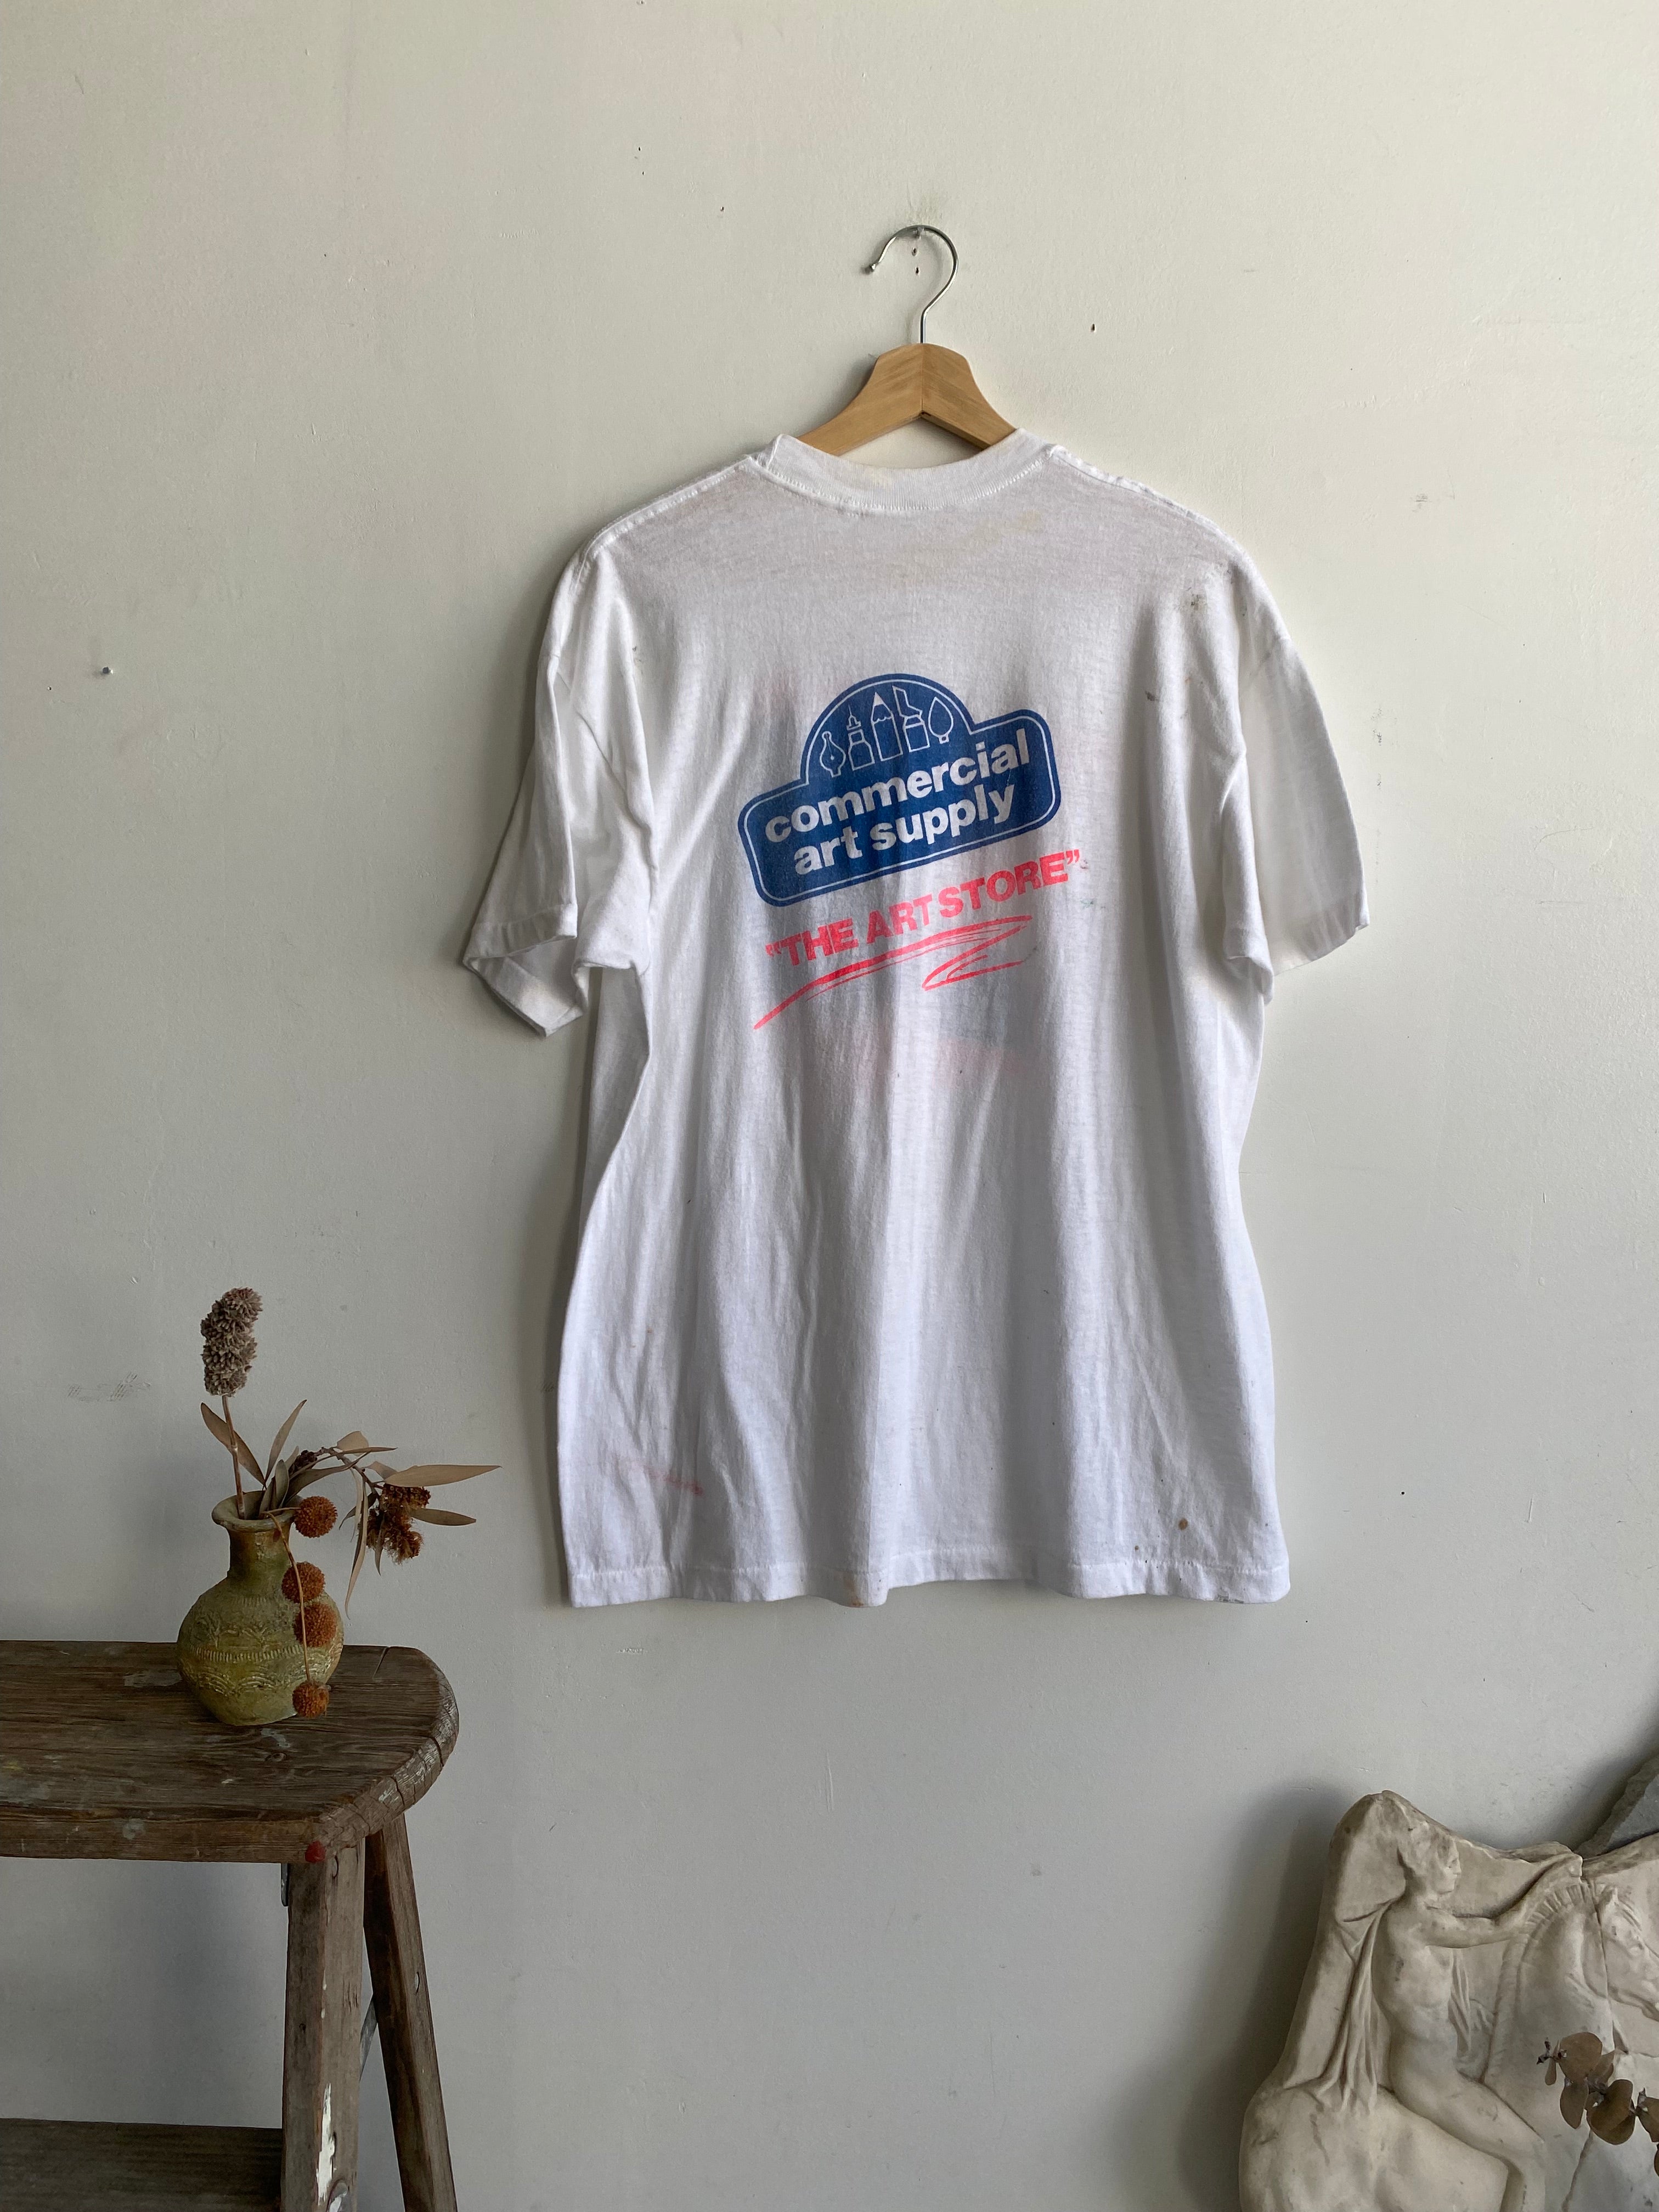 1980s Commercial Art Supply T-Shirt (M/L)